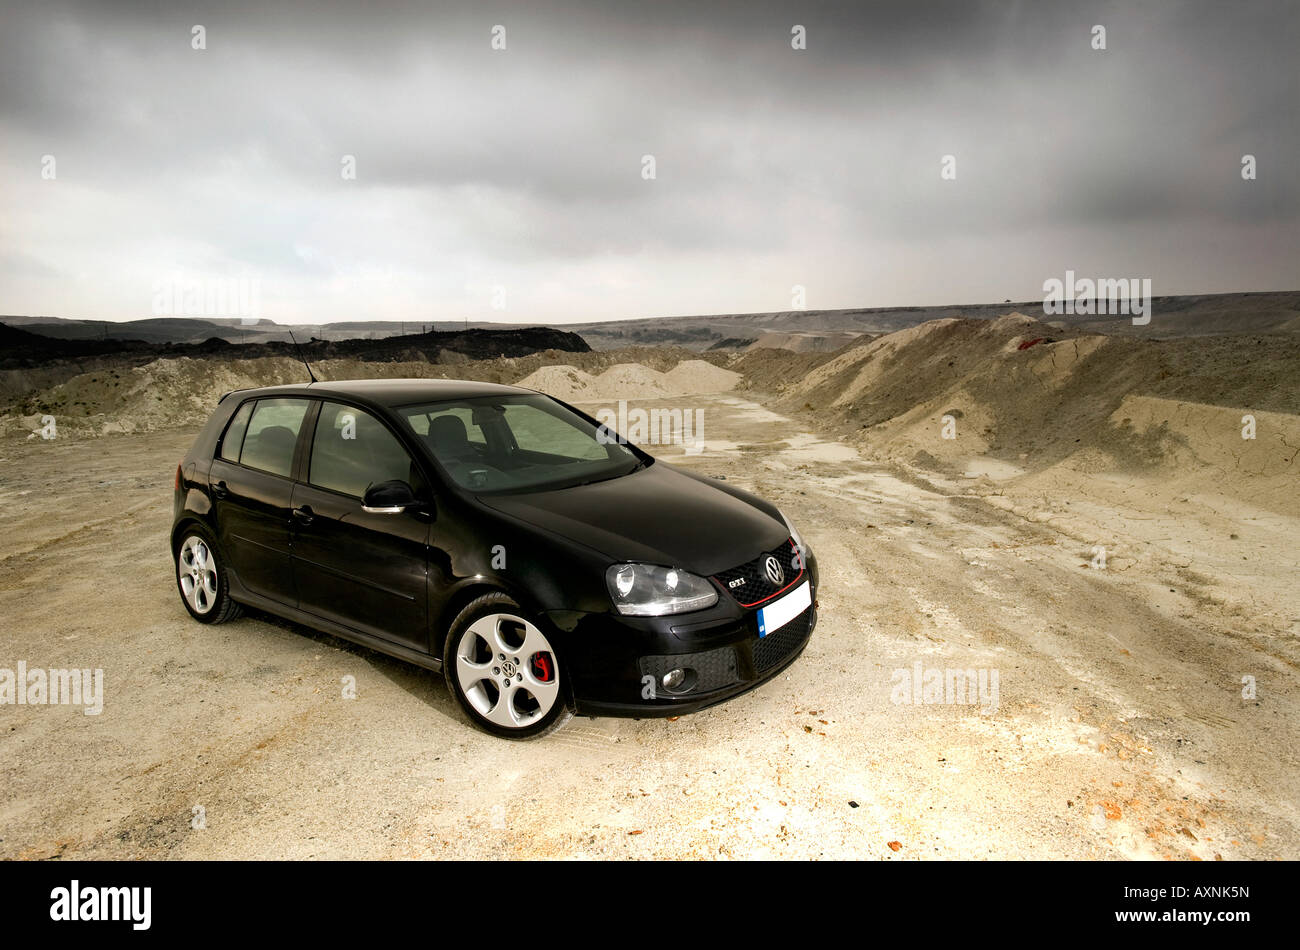 https://c8.alamy.com/comp/AXNK5N/2007-mark-5-volkswagen-vw-golf-gti-turbo-black-lit-by-flash-speedlights-AXNK5N.jpg